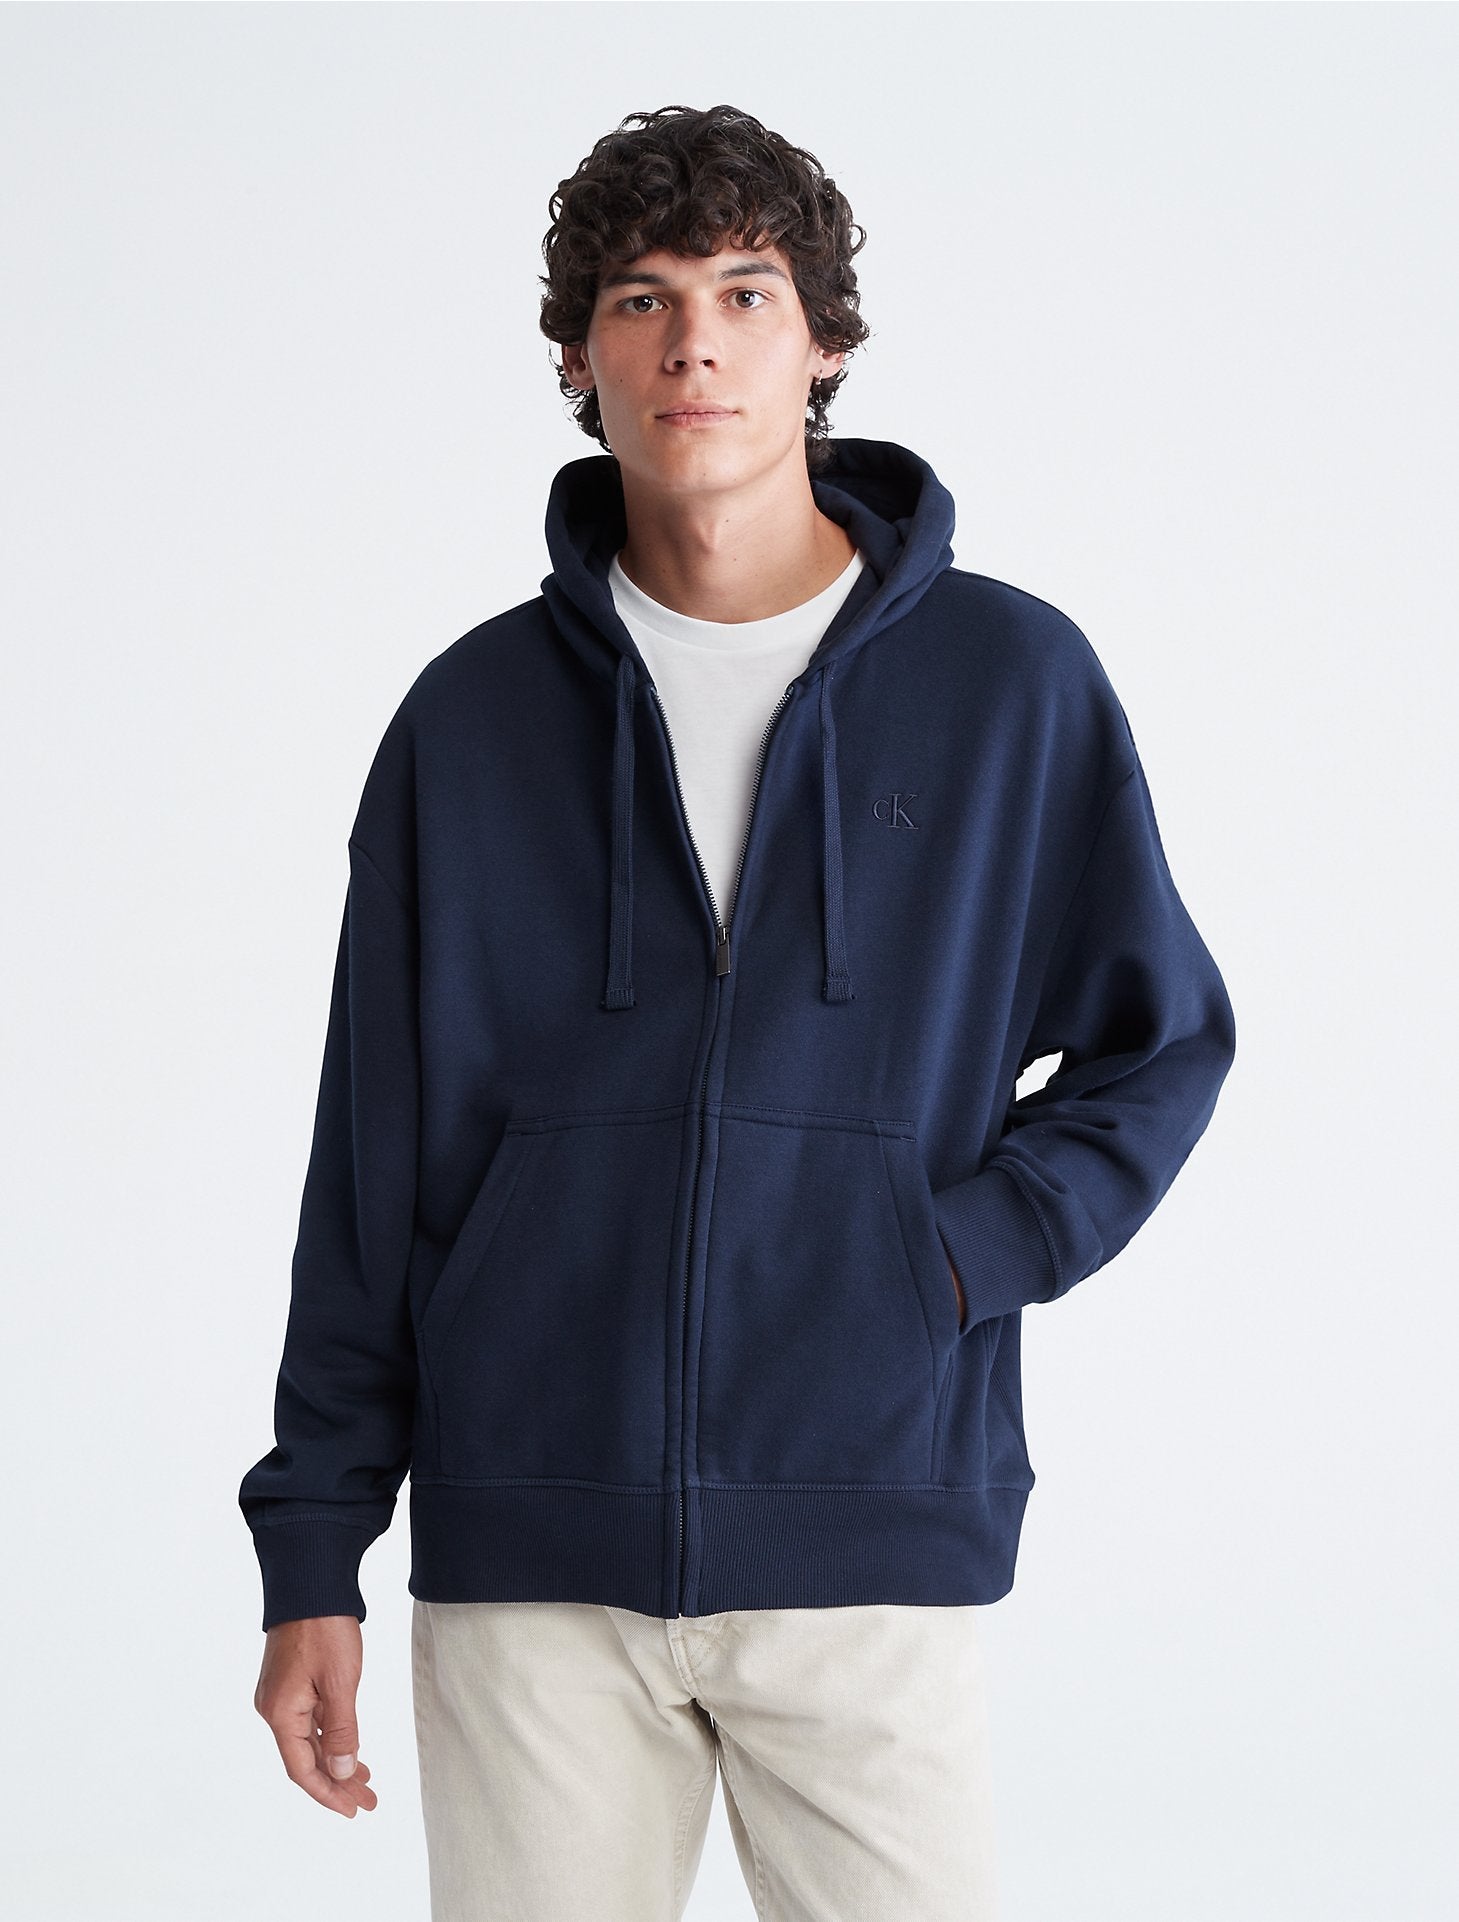 Calvin Klein Relaxed Fit Archive Logo Fleece Full Zip Hoodie - Men